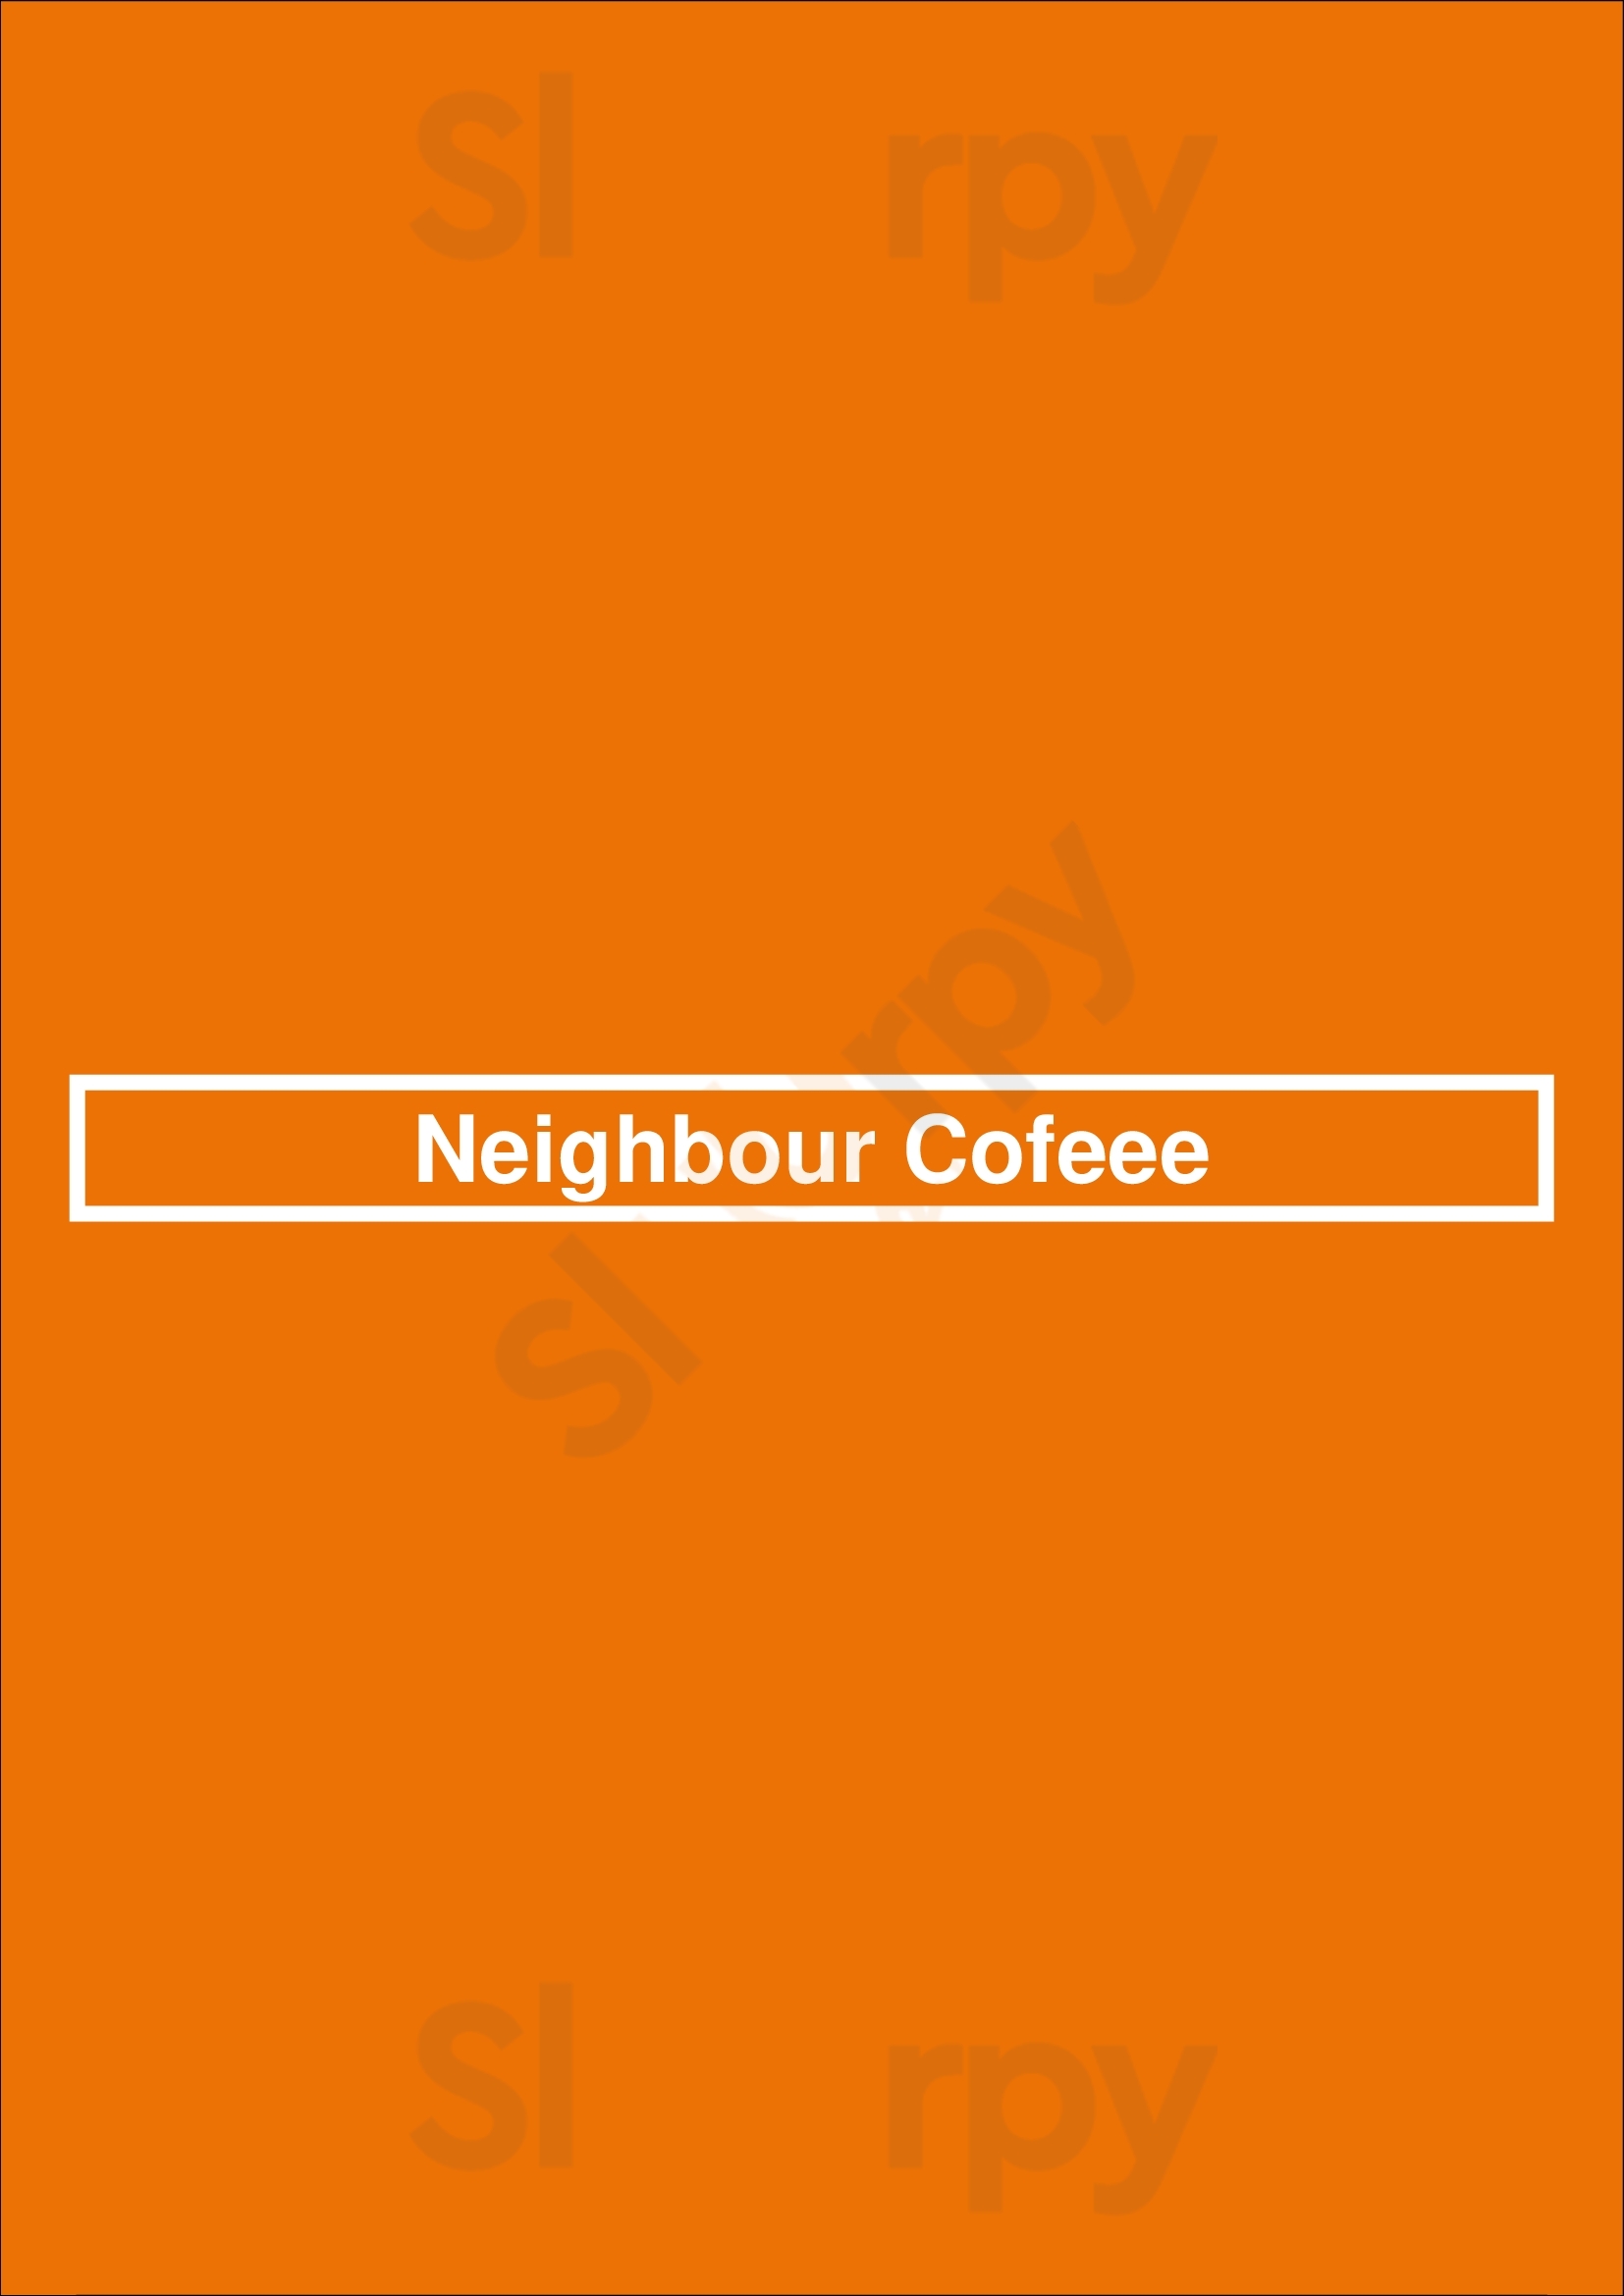 Neighbour Cofeee Calgary Menu - 1